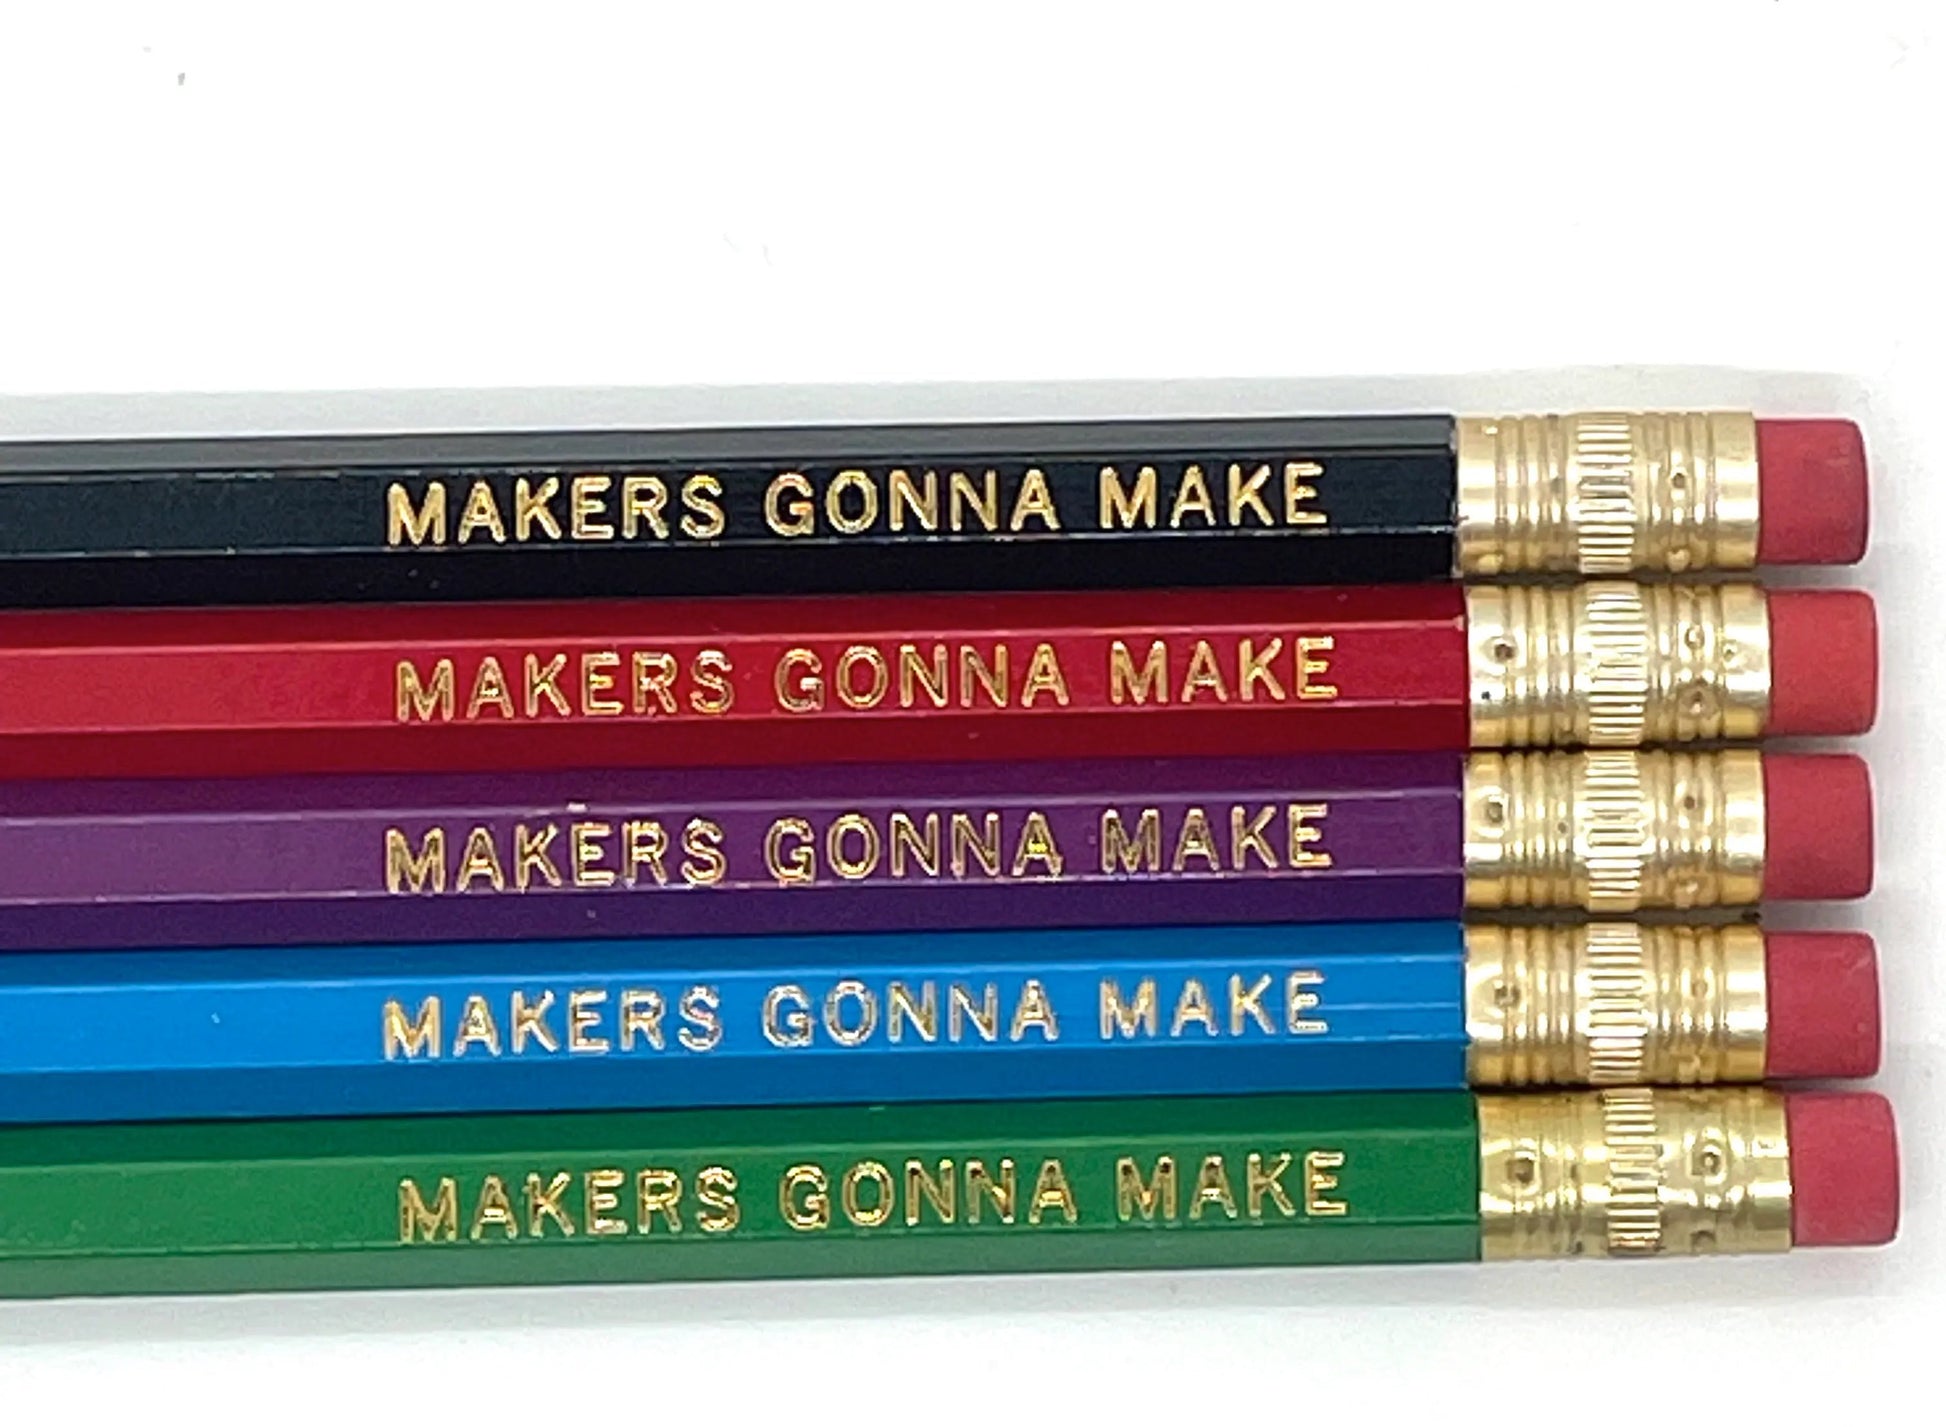 Crafty Pencils - makers gonna make at Wabi Sabi